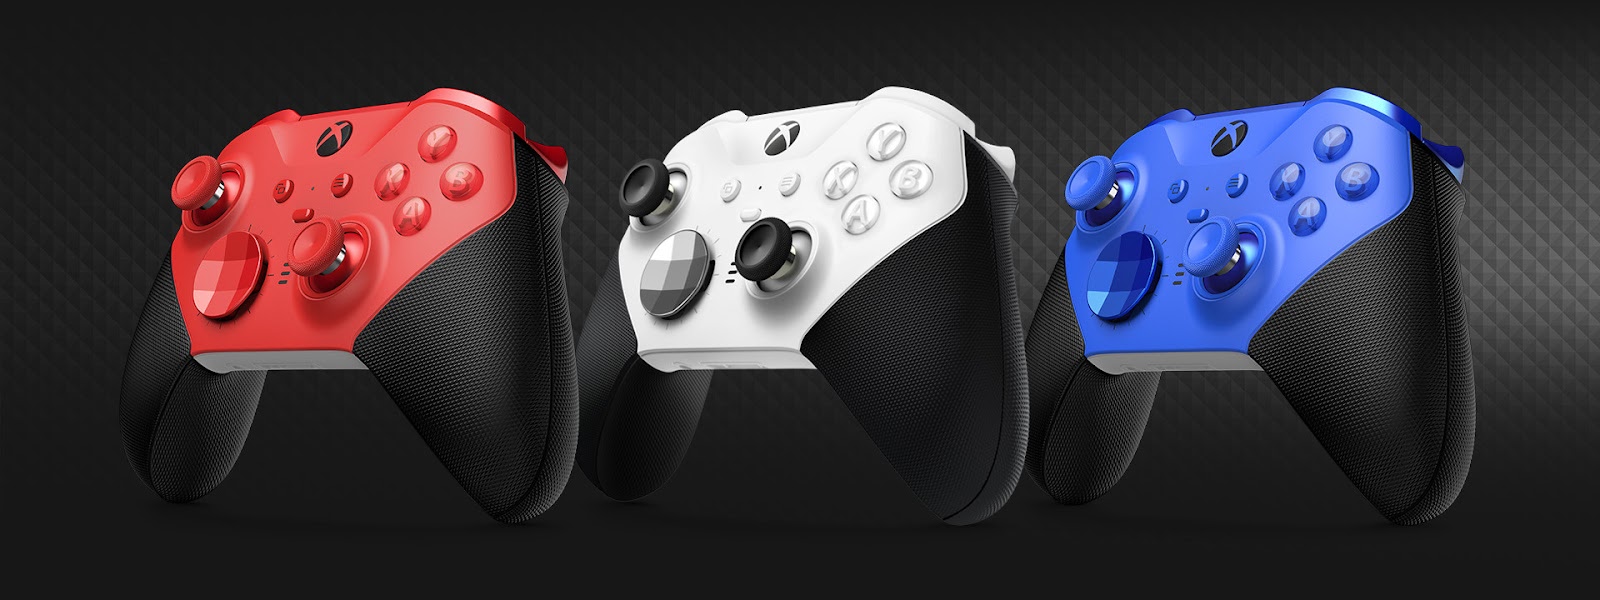 Xbox Elite Core controller colors